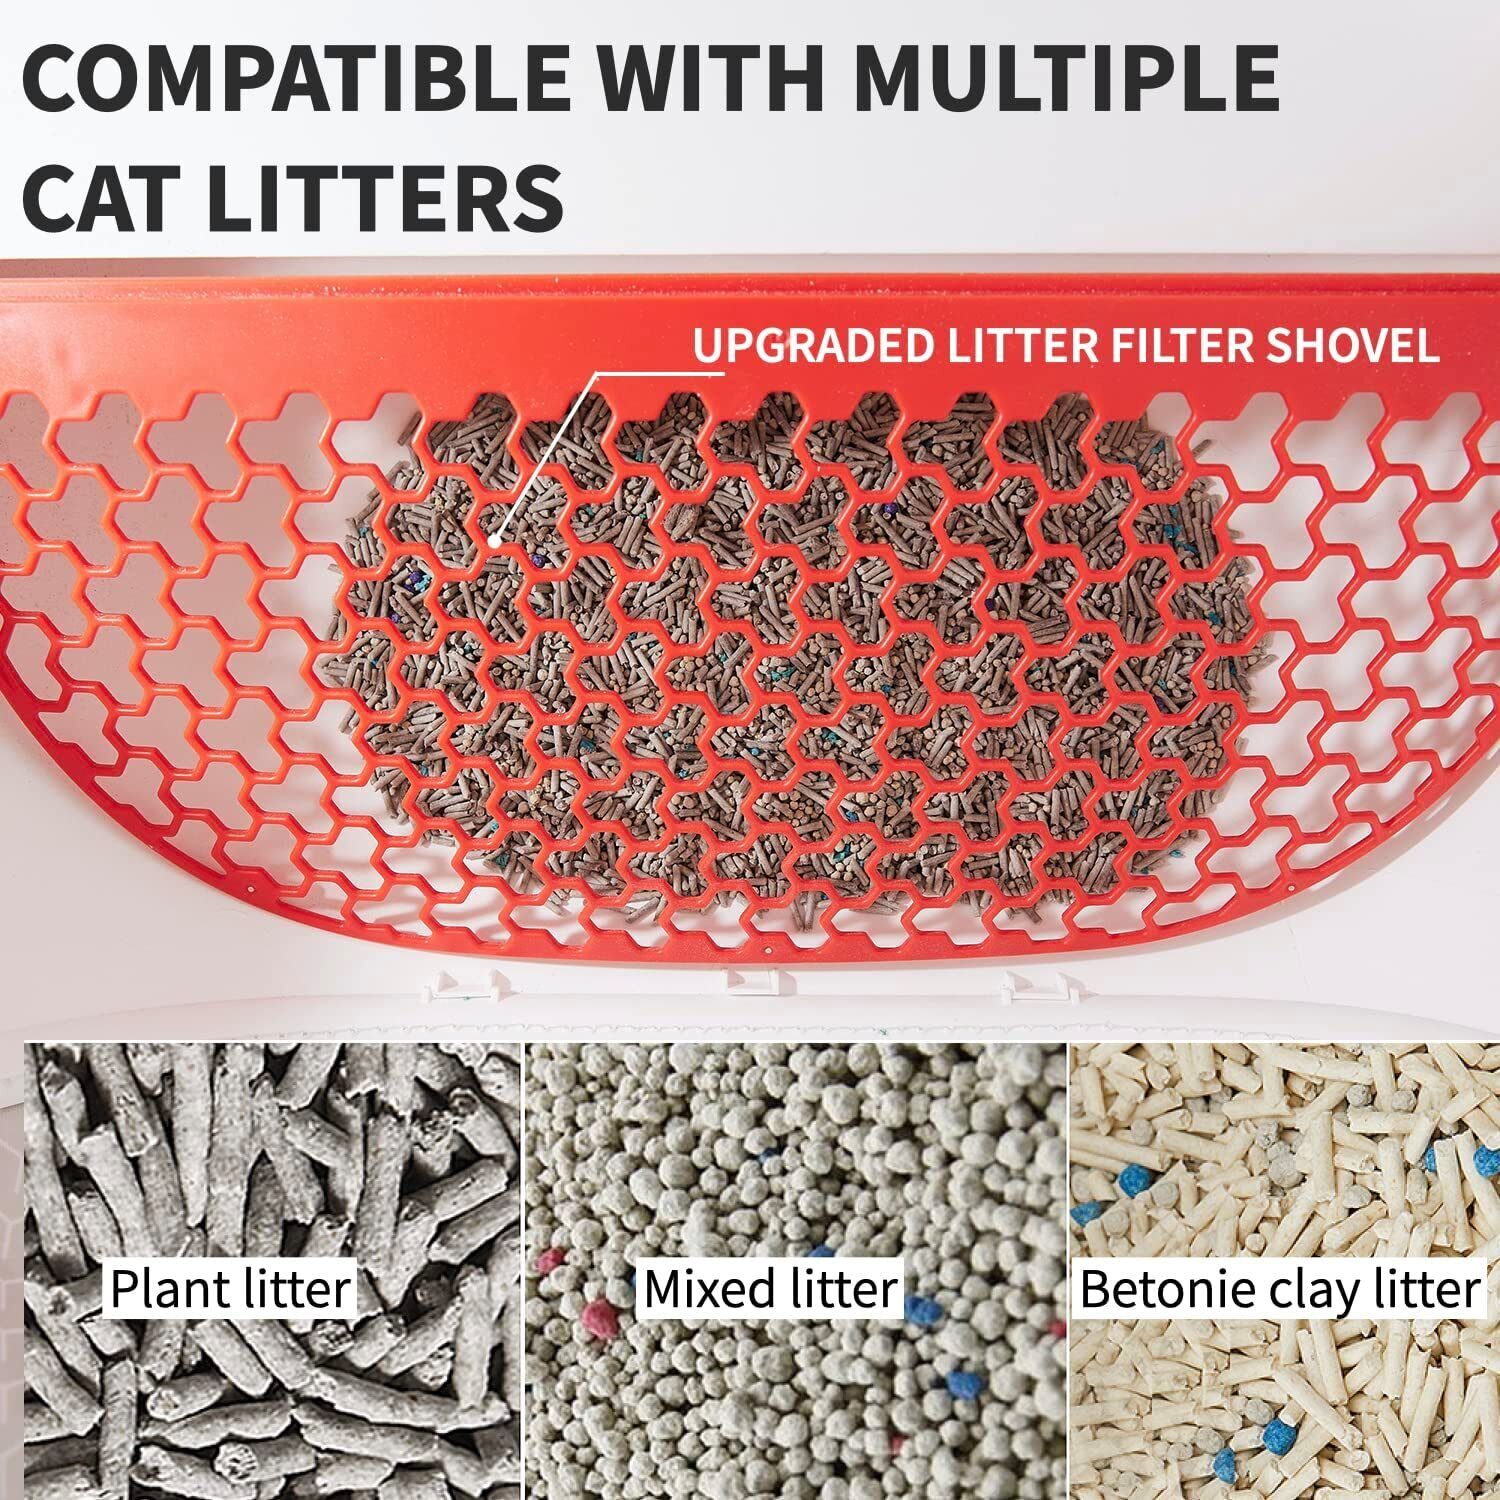 PETKIT PuraMAX Self-Cleaning Cat Litter Box App space 76L Certified Refurbished